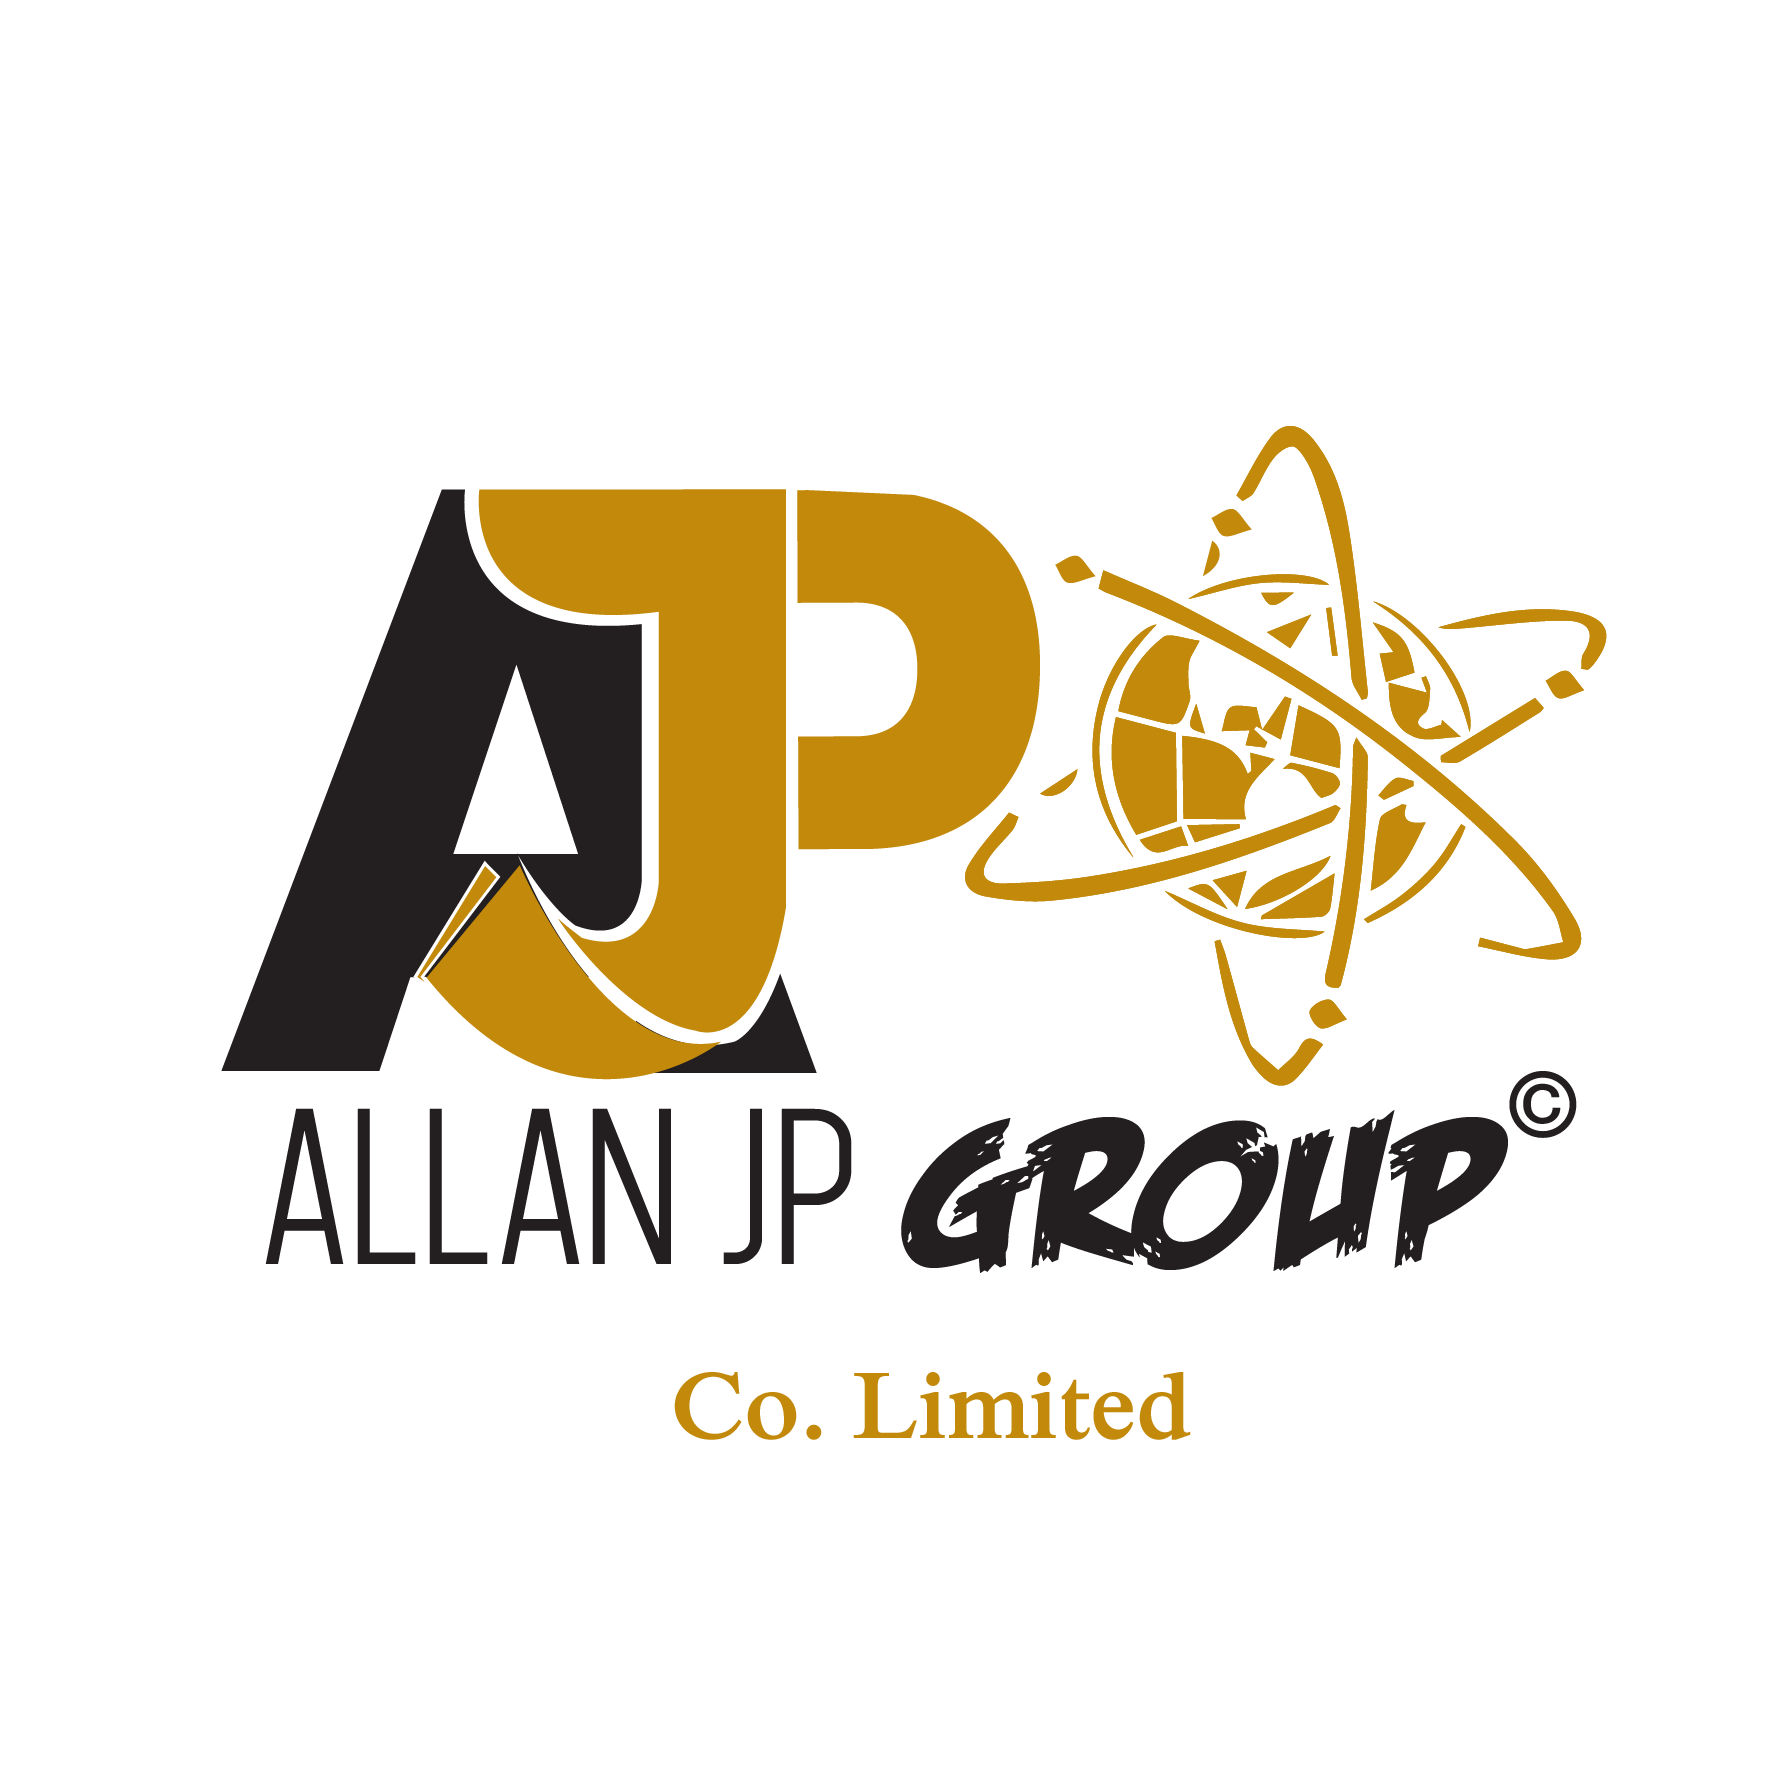 Allan Jp Group